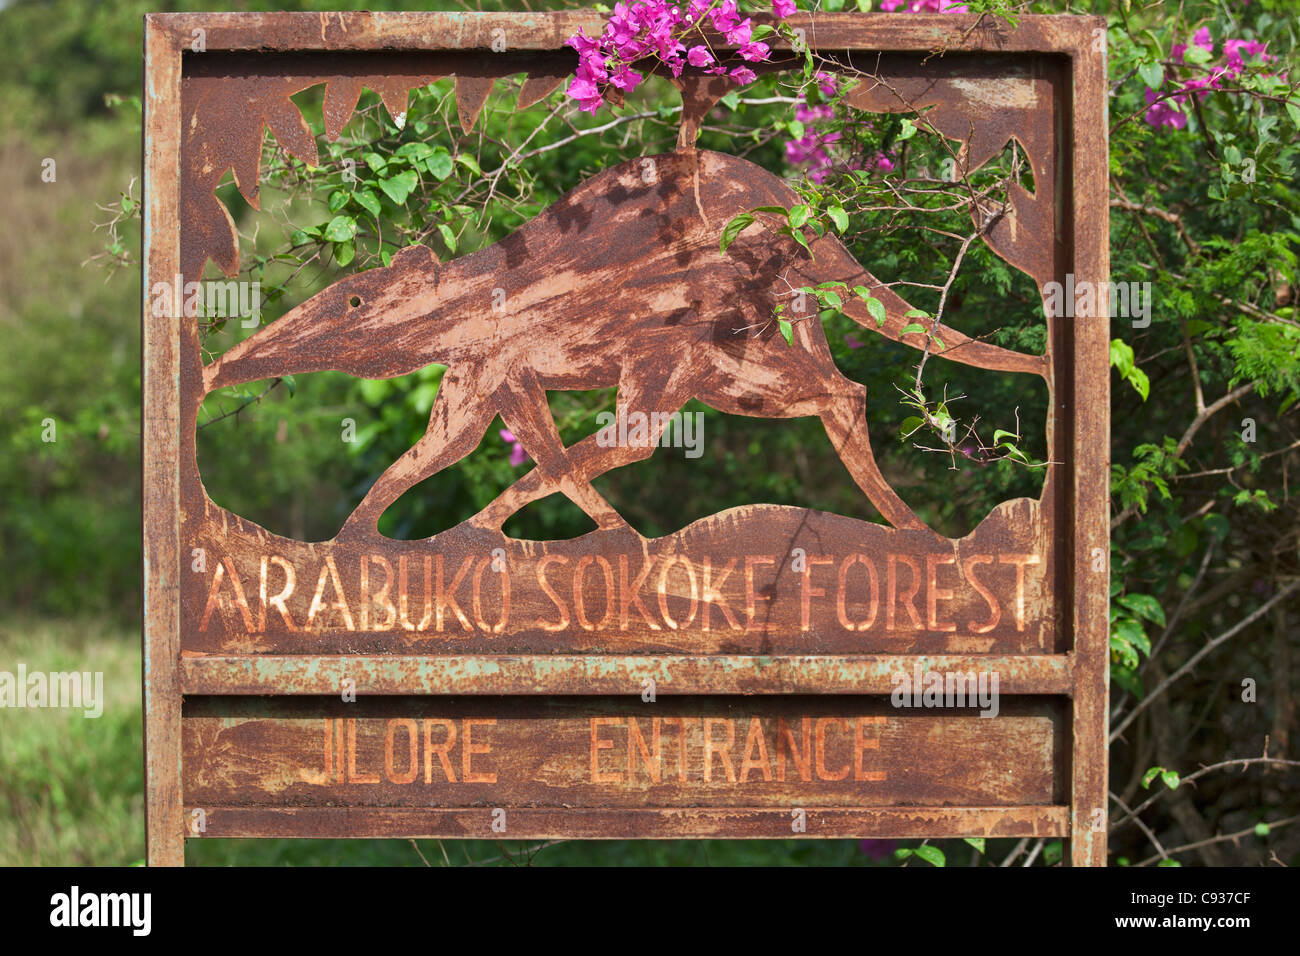 The sign to the Jilore entrance of the Arabuko-Sokoke Forest near Malindi. Stock Photo